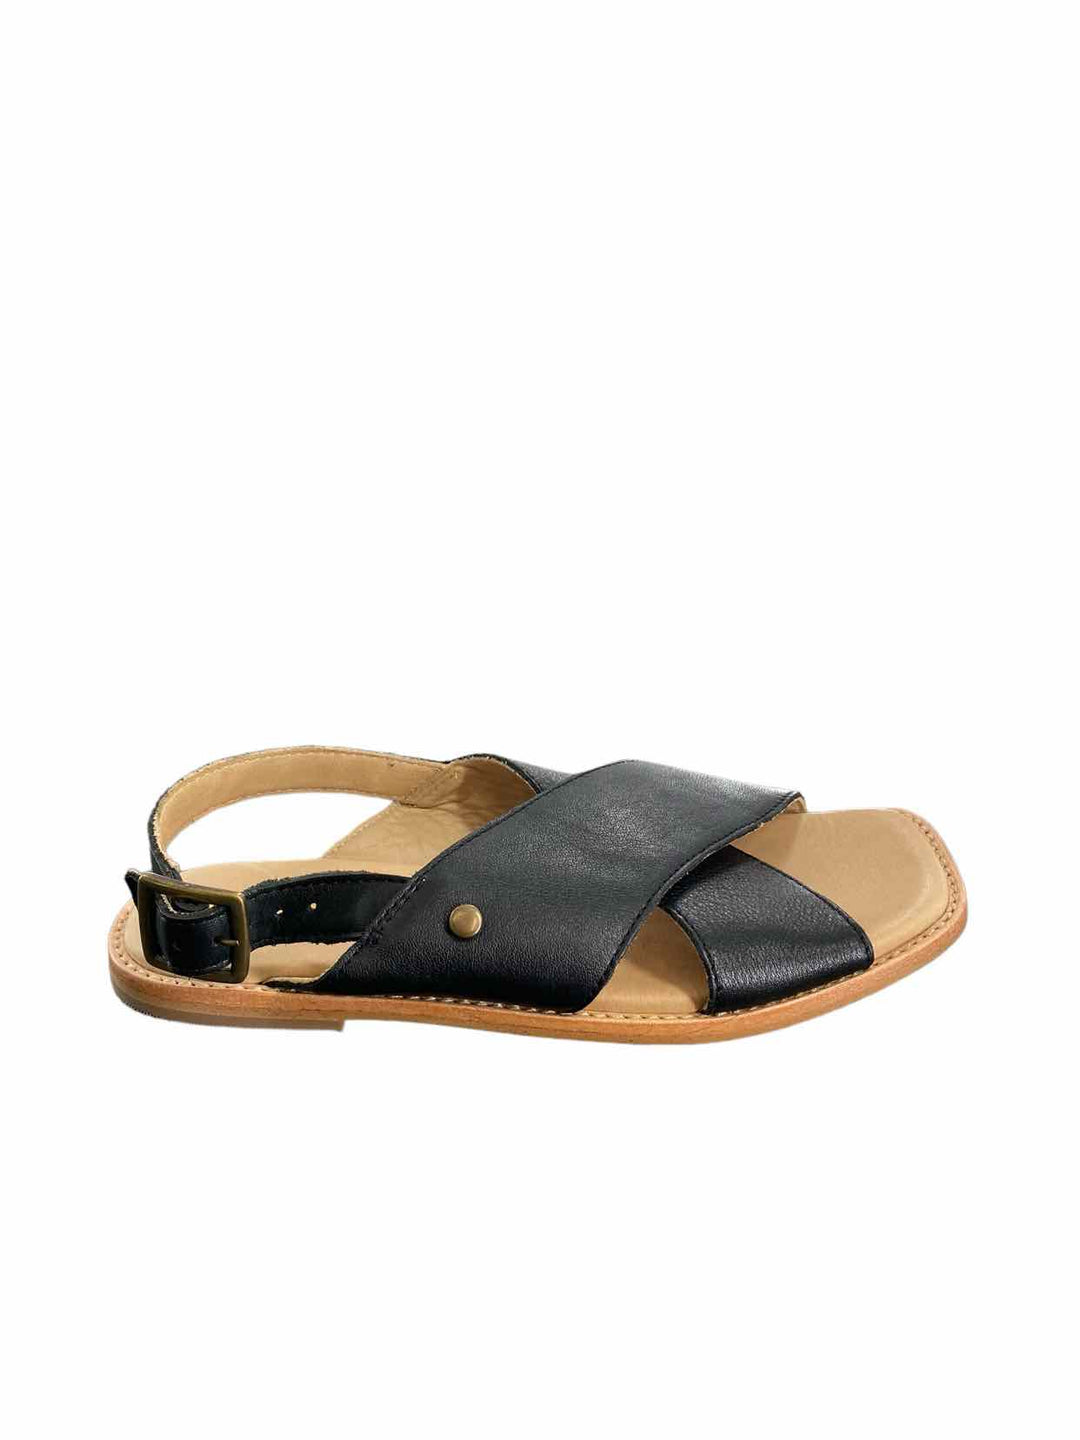 Portland Leather Goods Shoe Size 6.5 Black Leather Sandals